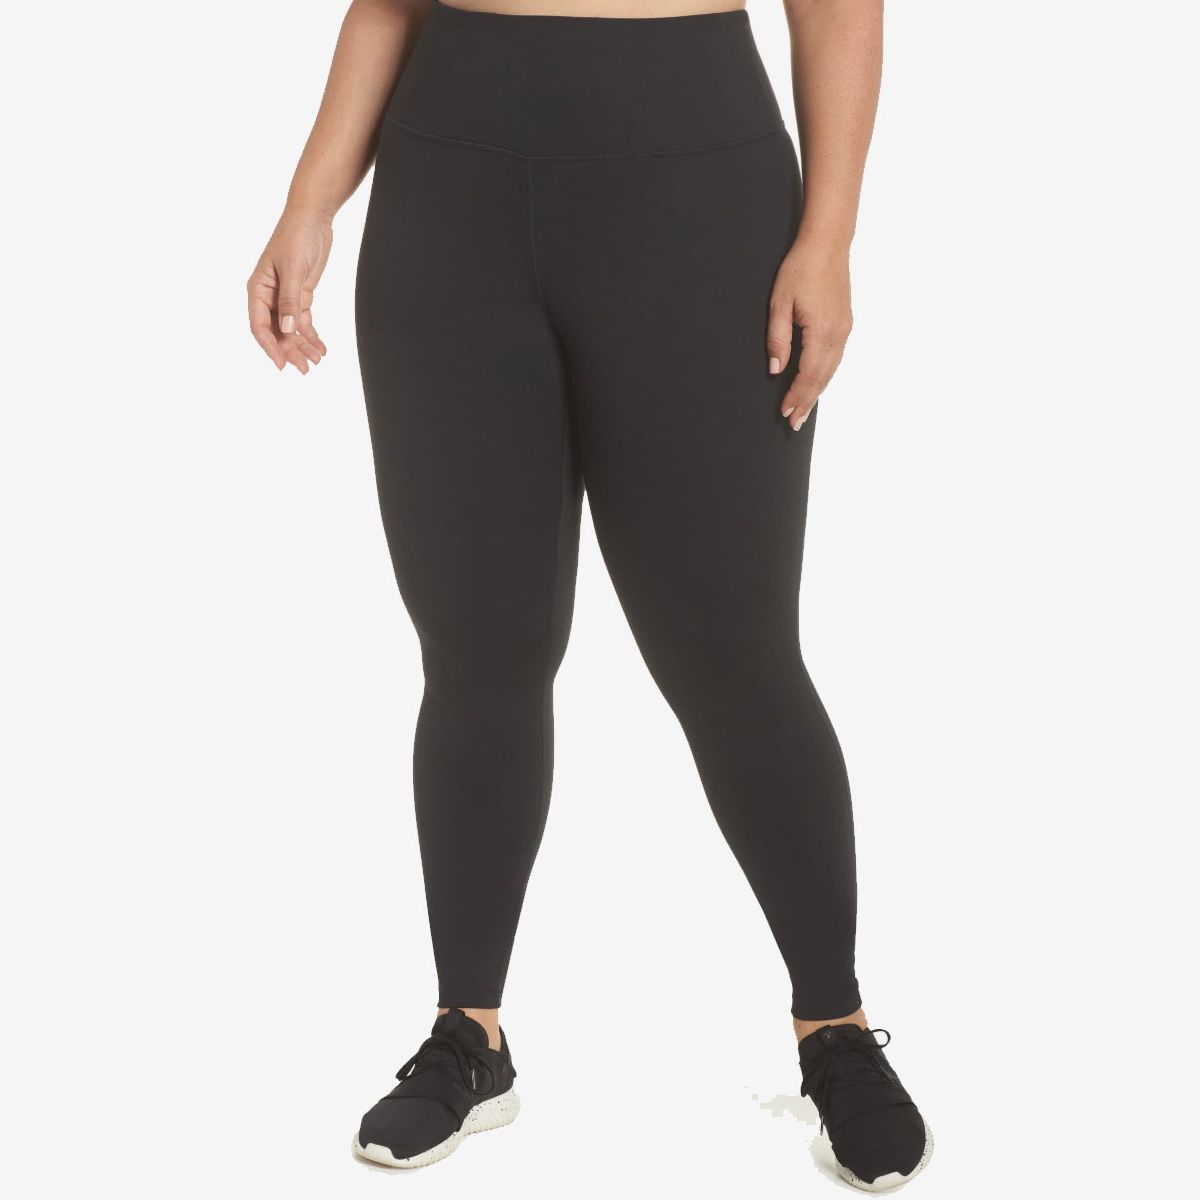 Details about   Women Core Support Compression Tights Yoga Pants Black Color Regular Size S-3XL 